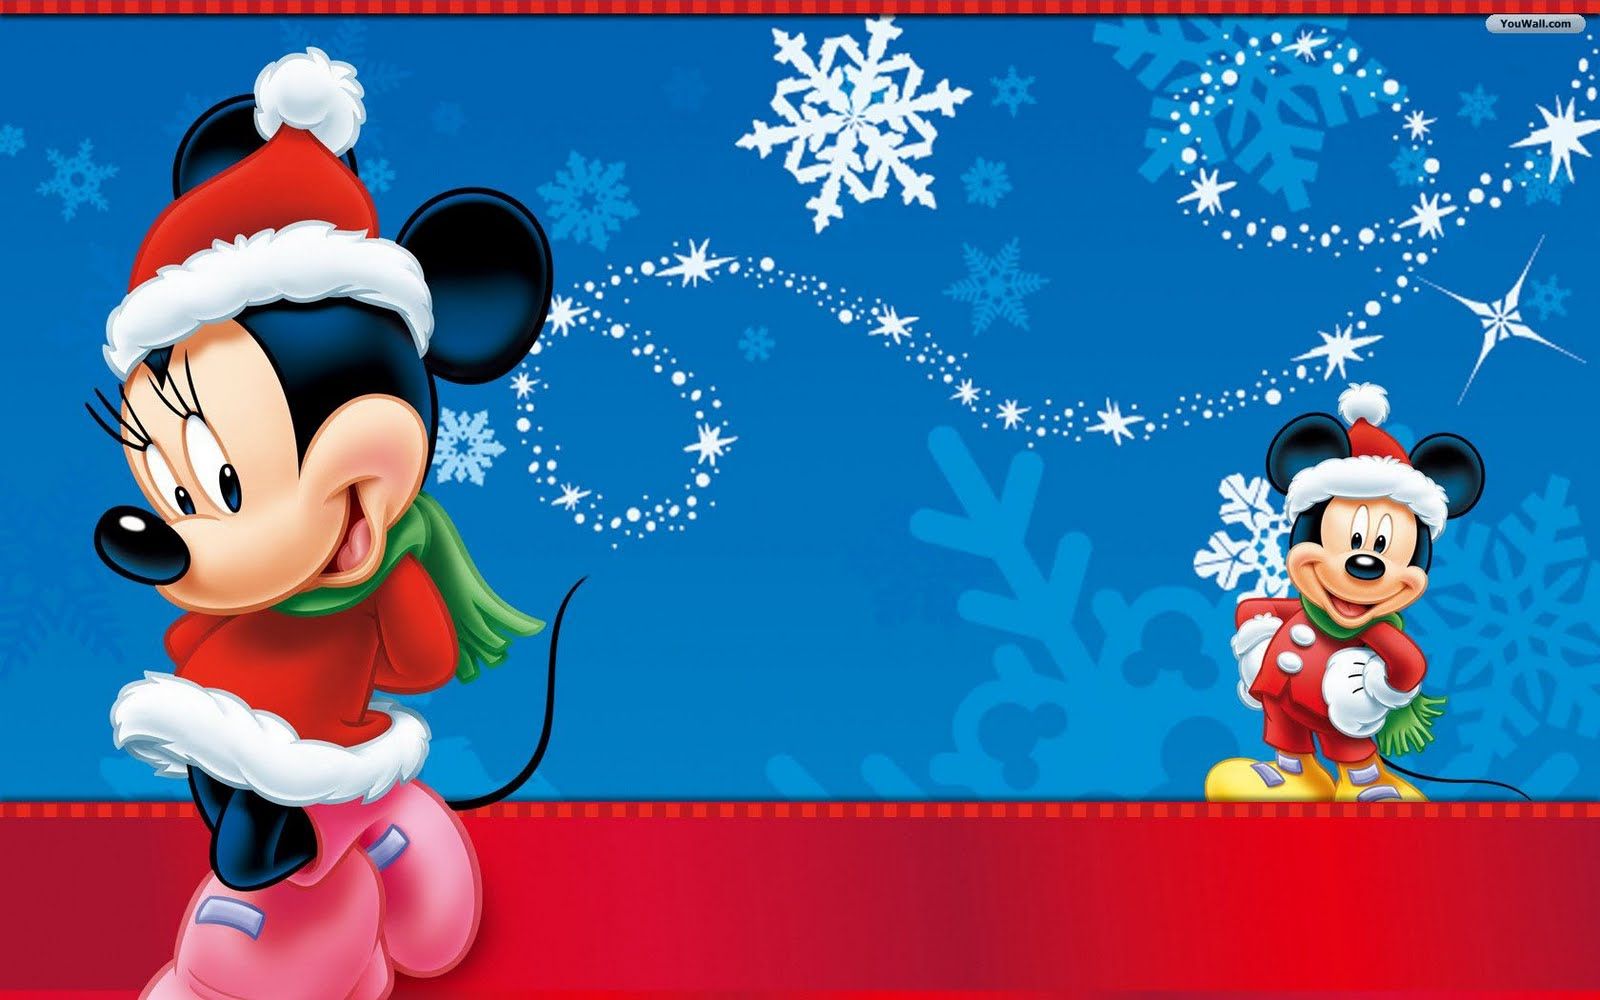 Christmas Background. Disney Christmas Wallpaper. Wallpaper Mansion. Disney christmas, Mickey mouse wallpaper, Disney merry christmas